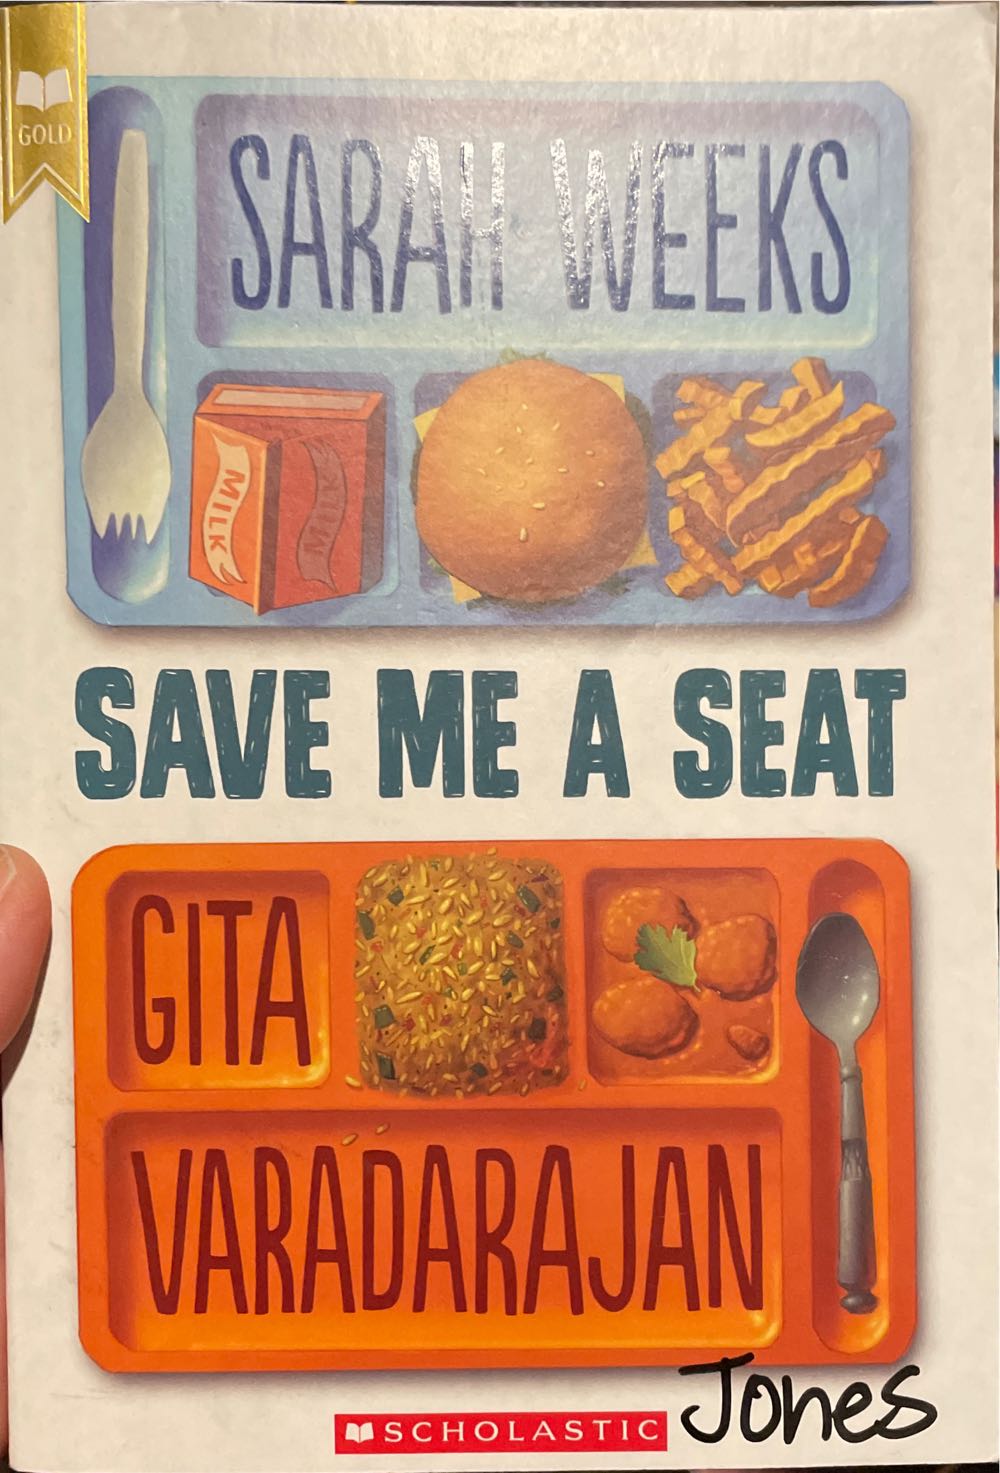 Save Me a Seat - Sarah Weeks (Scholastic Press - Paperback) book collectible [Barcode 9780545846615] - Main Image 1